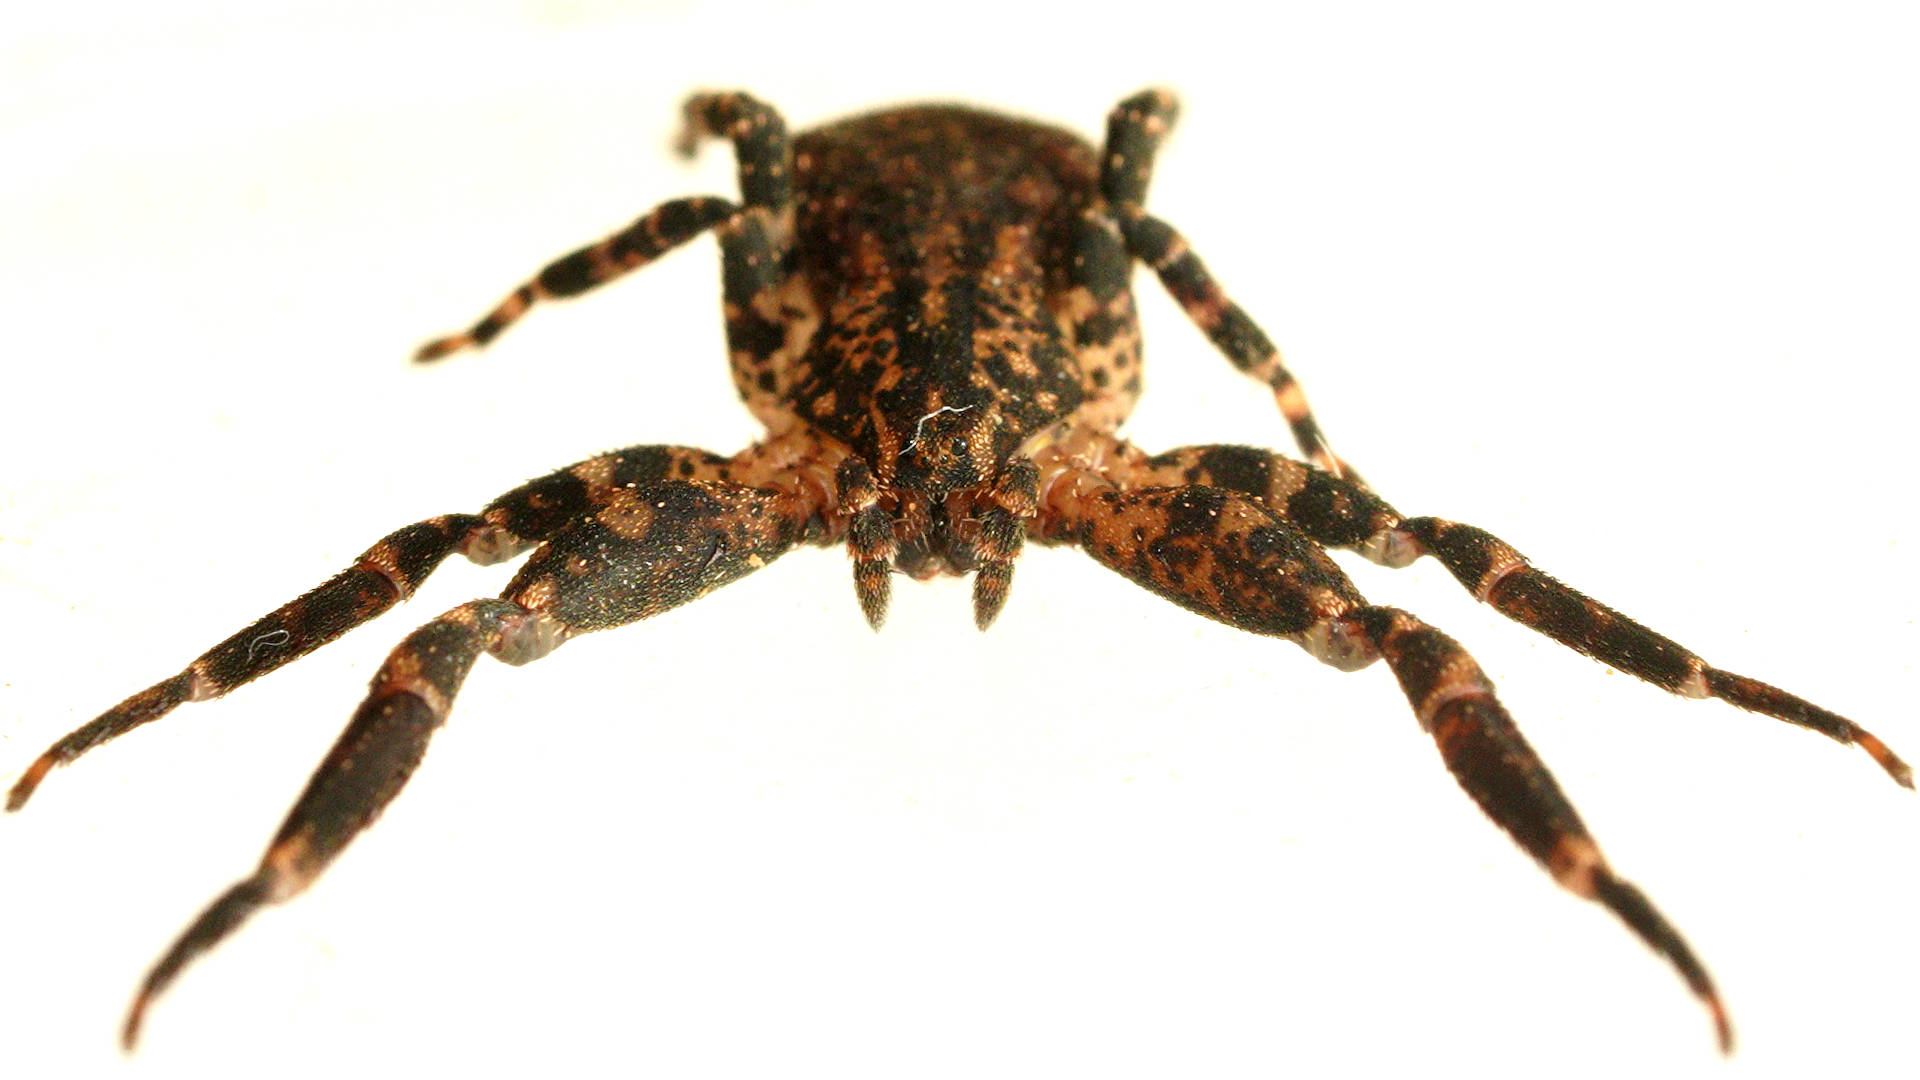 Similar Bark Crab Spider (Isala similis)